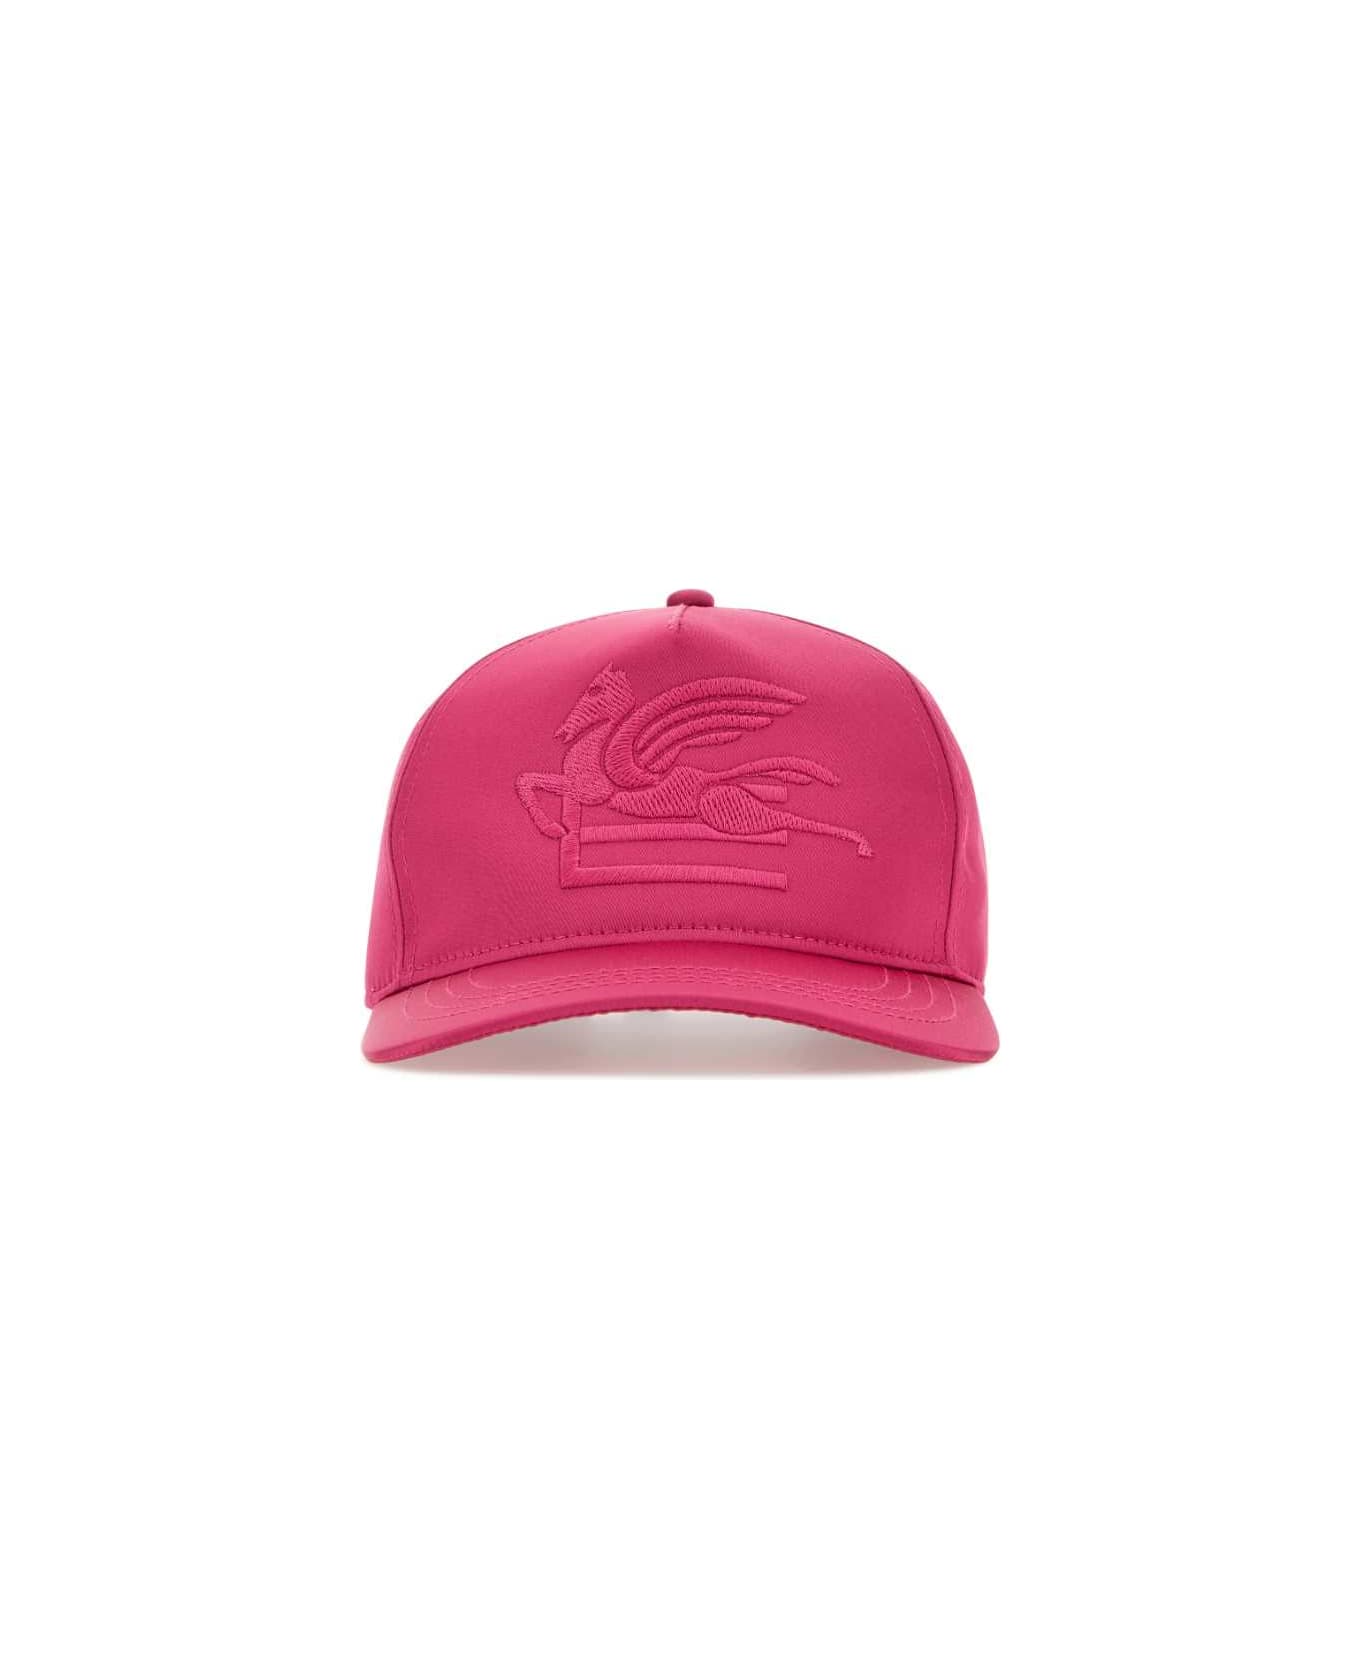 Etro Fuchsia Satin Baseball Cap - PINK ヘアアクセサリー